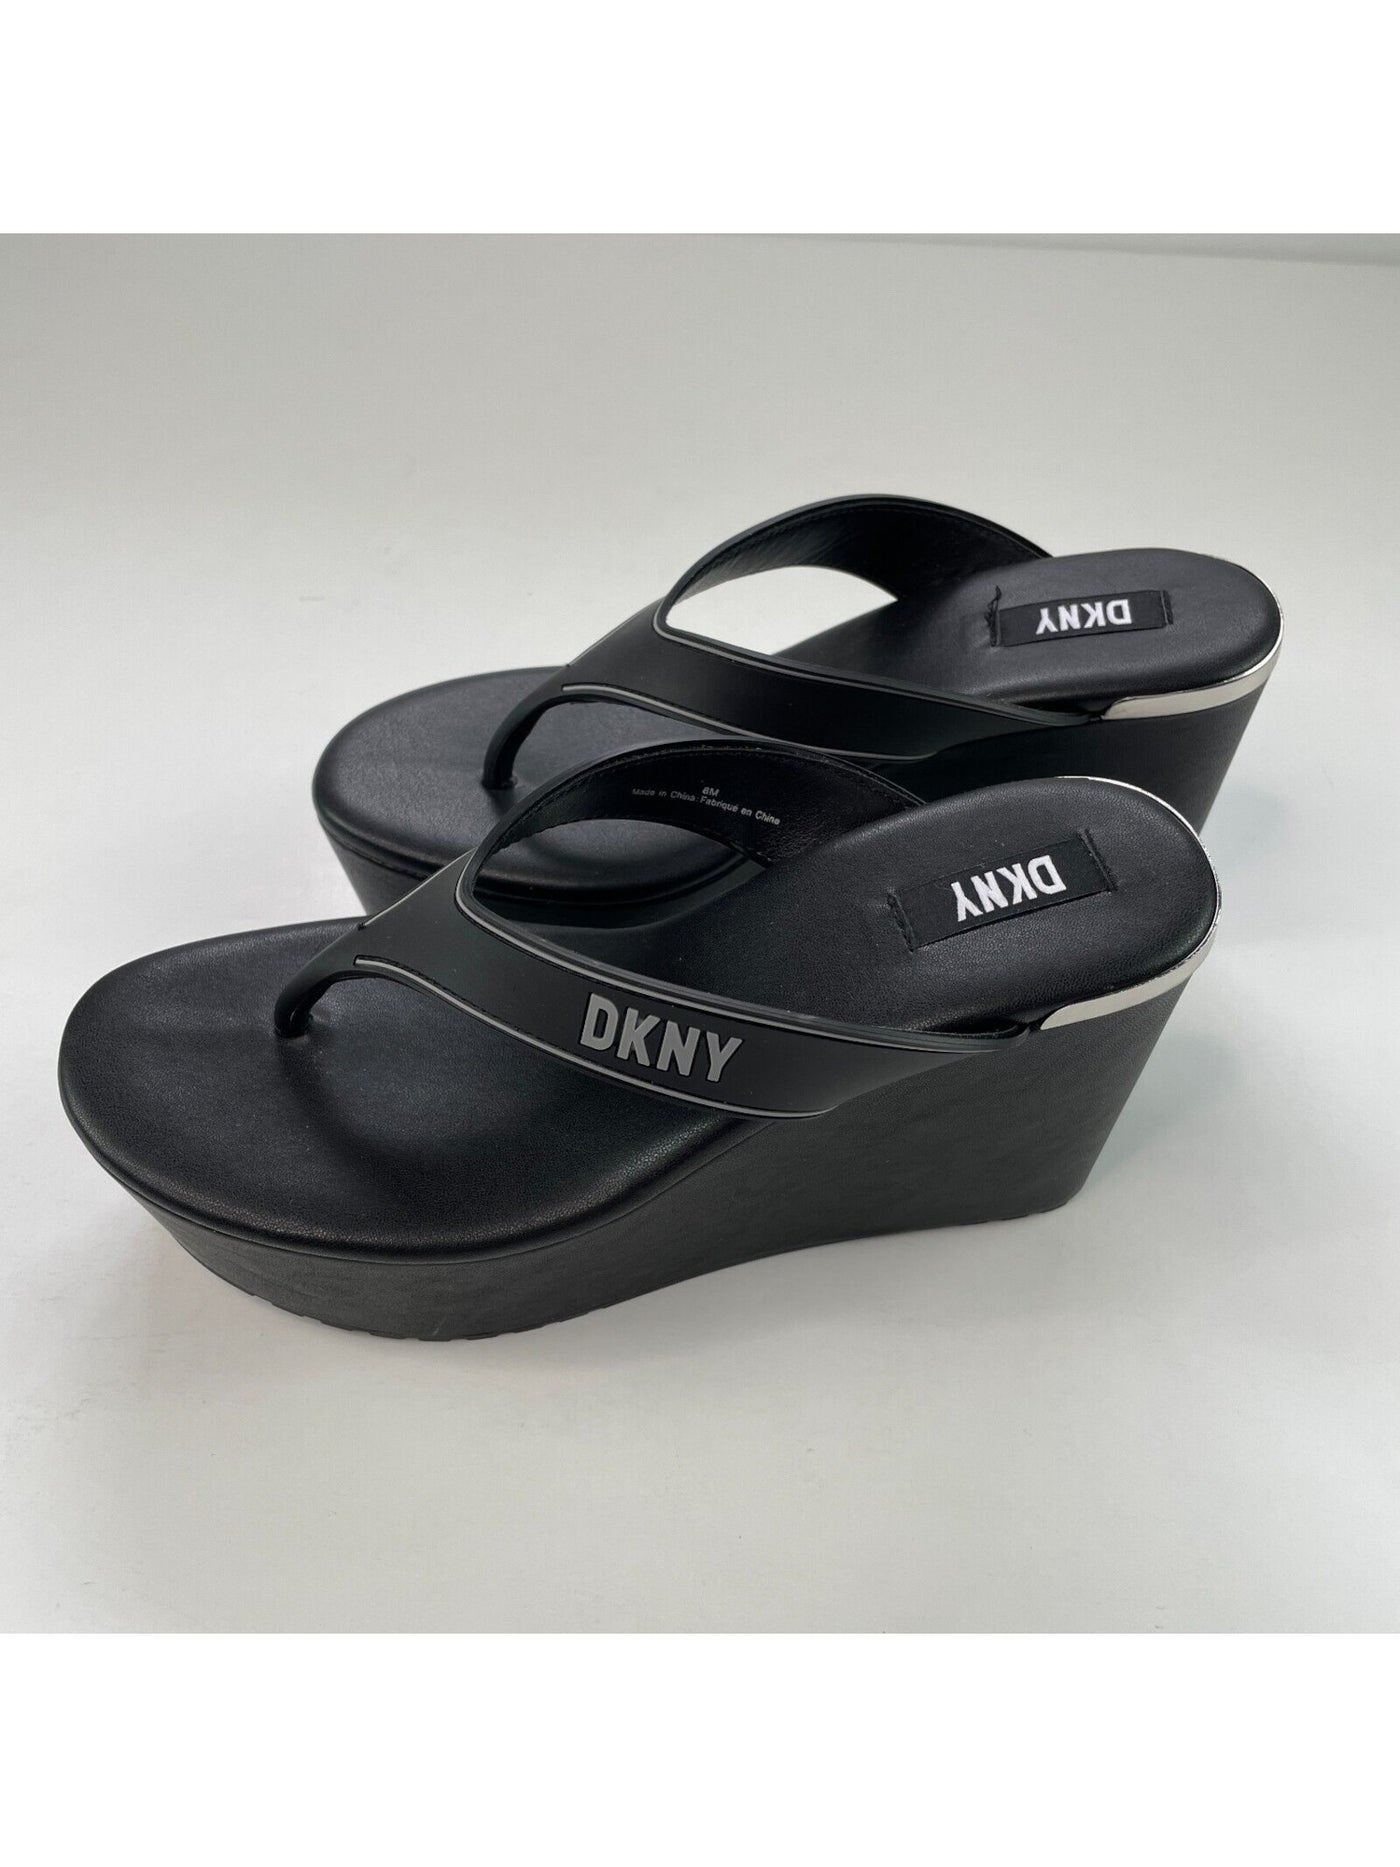 DKNY Womens Black 2" Platform Comfort Logo Trina Round Toe Wedge Slip On Thong Sandals Shoes 7 M